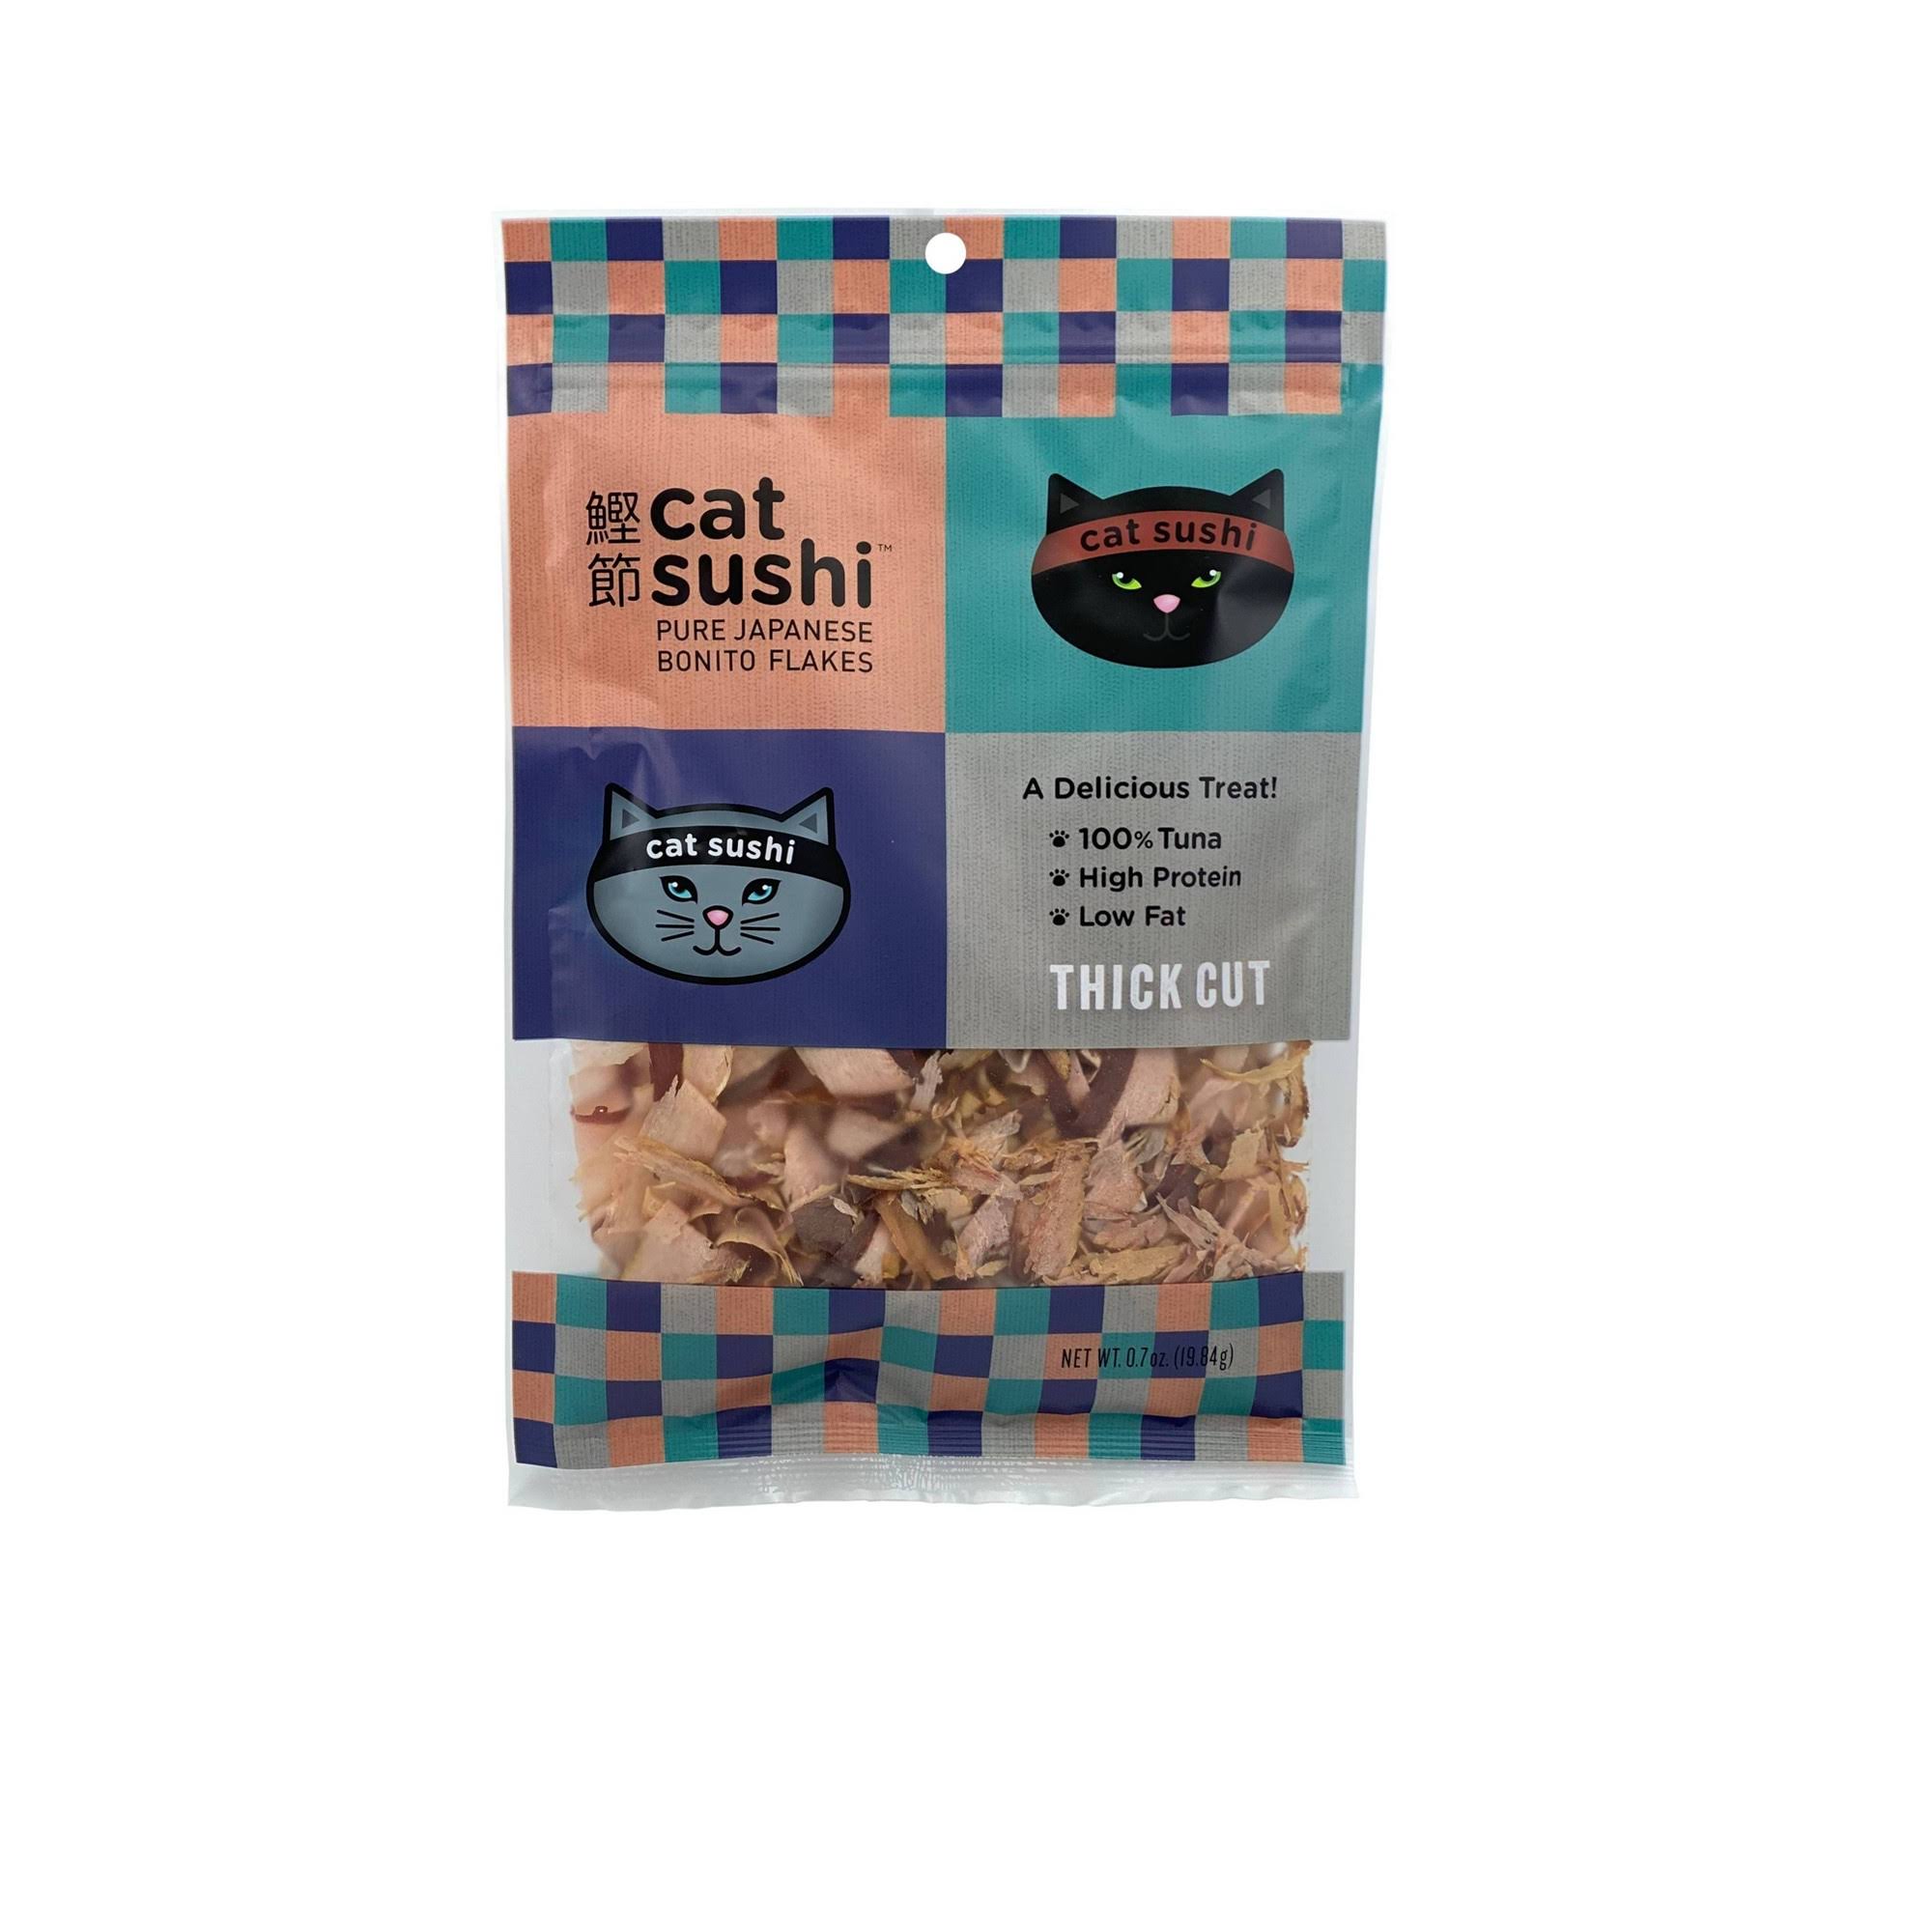 Cat Sushi Bonito Flakes (Thick Cut, 0.7oz)